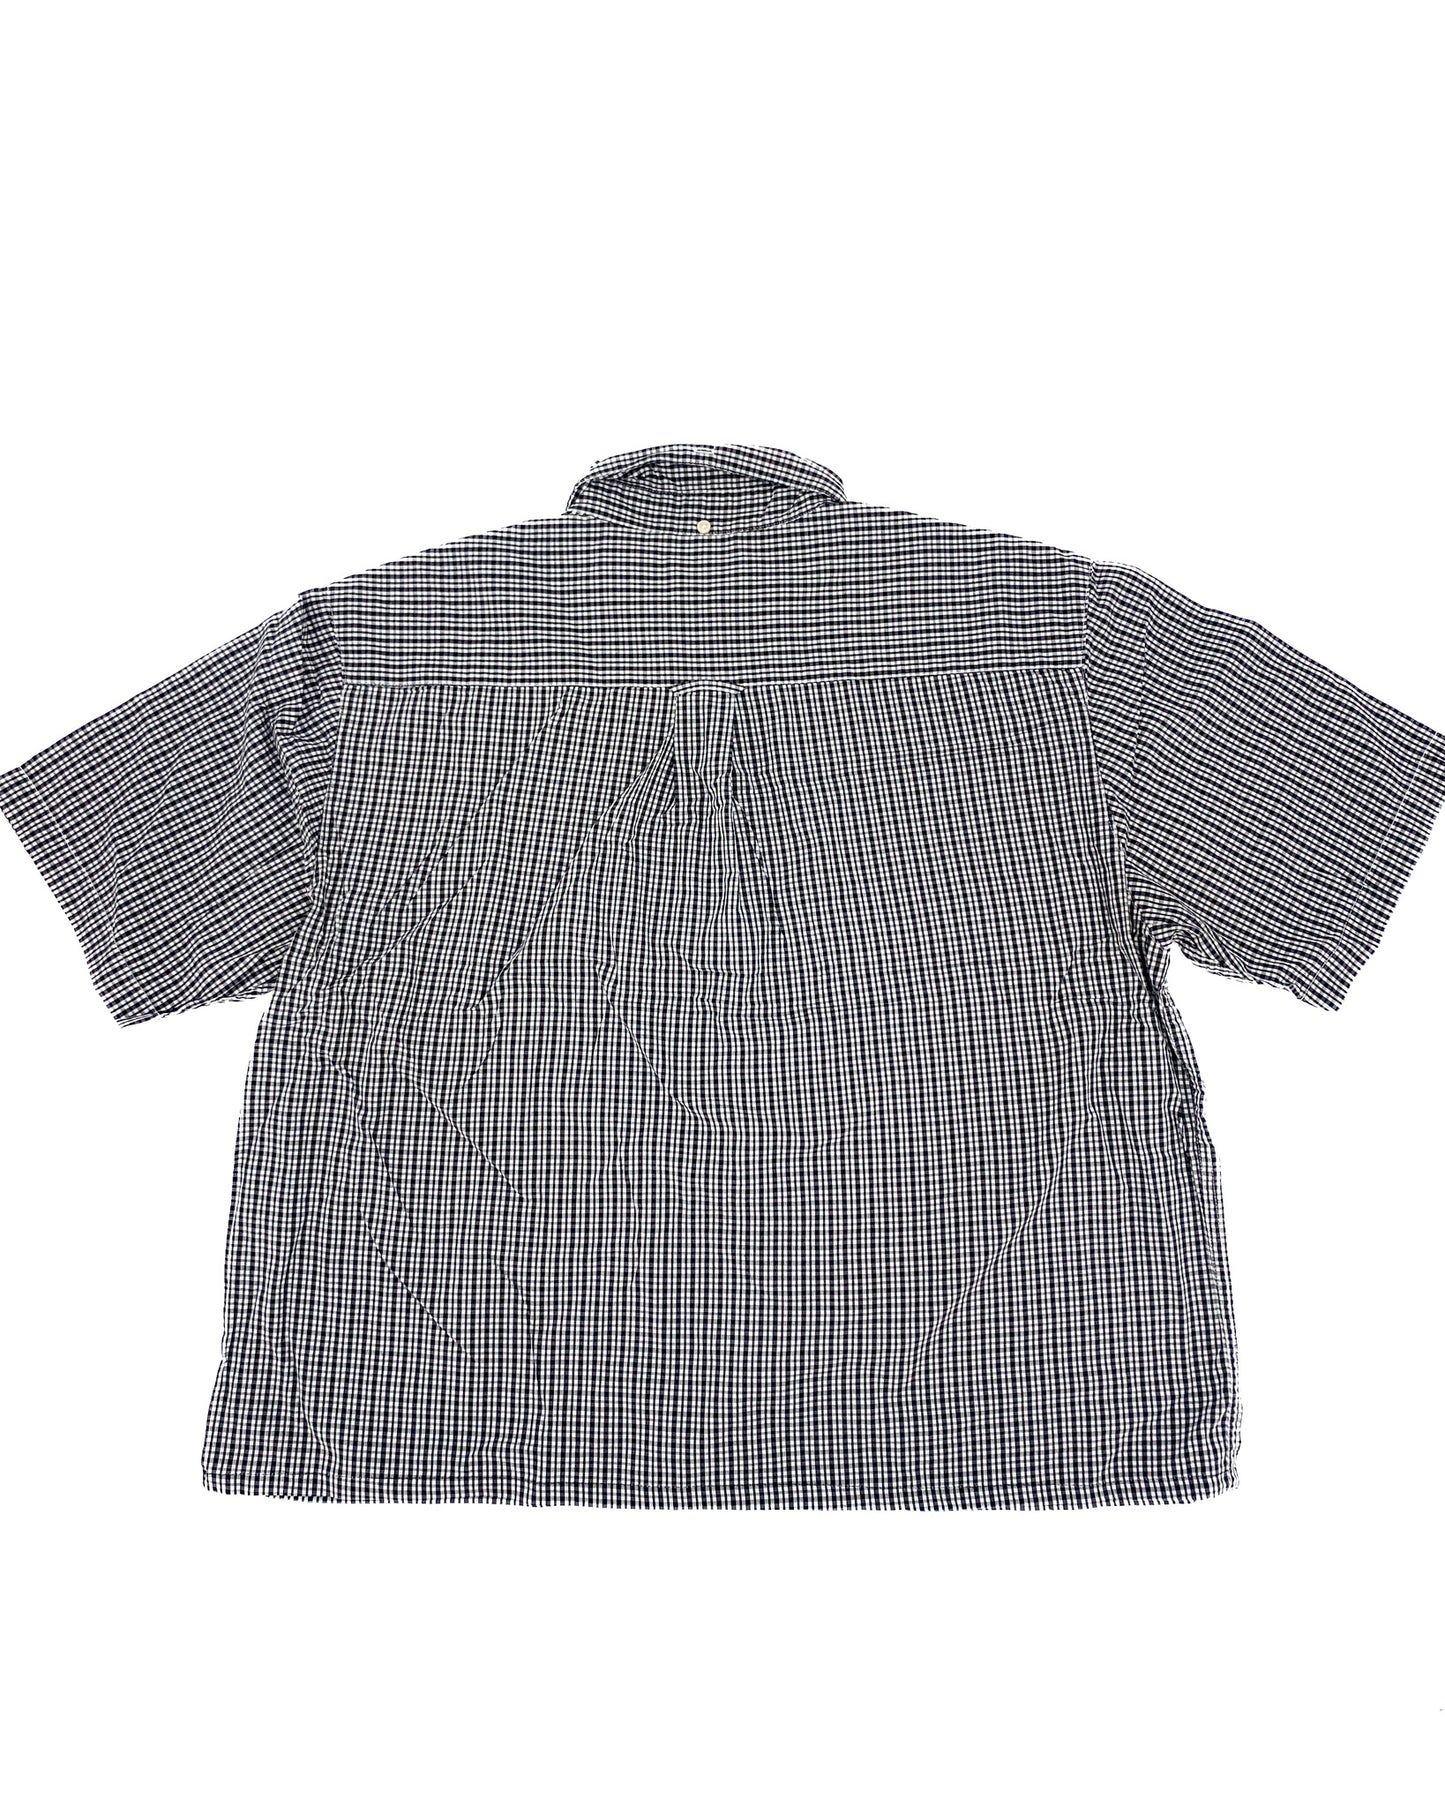 Vintage Black/White Checkered Shirt - L